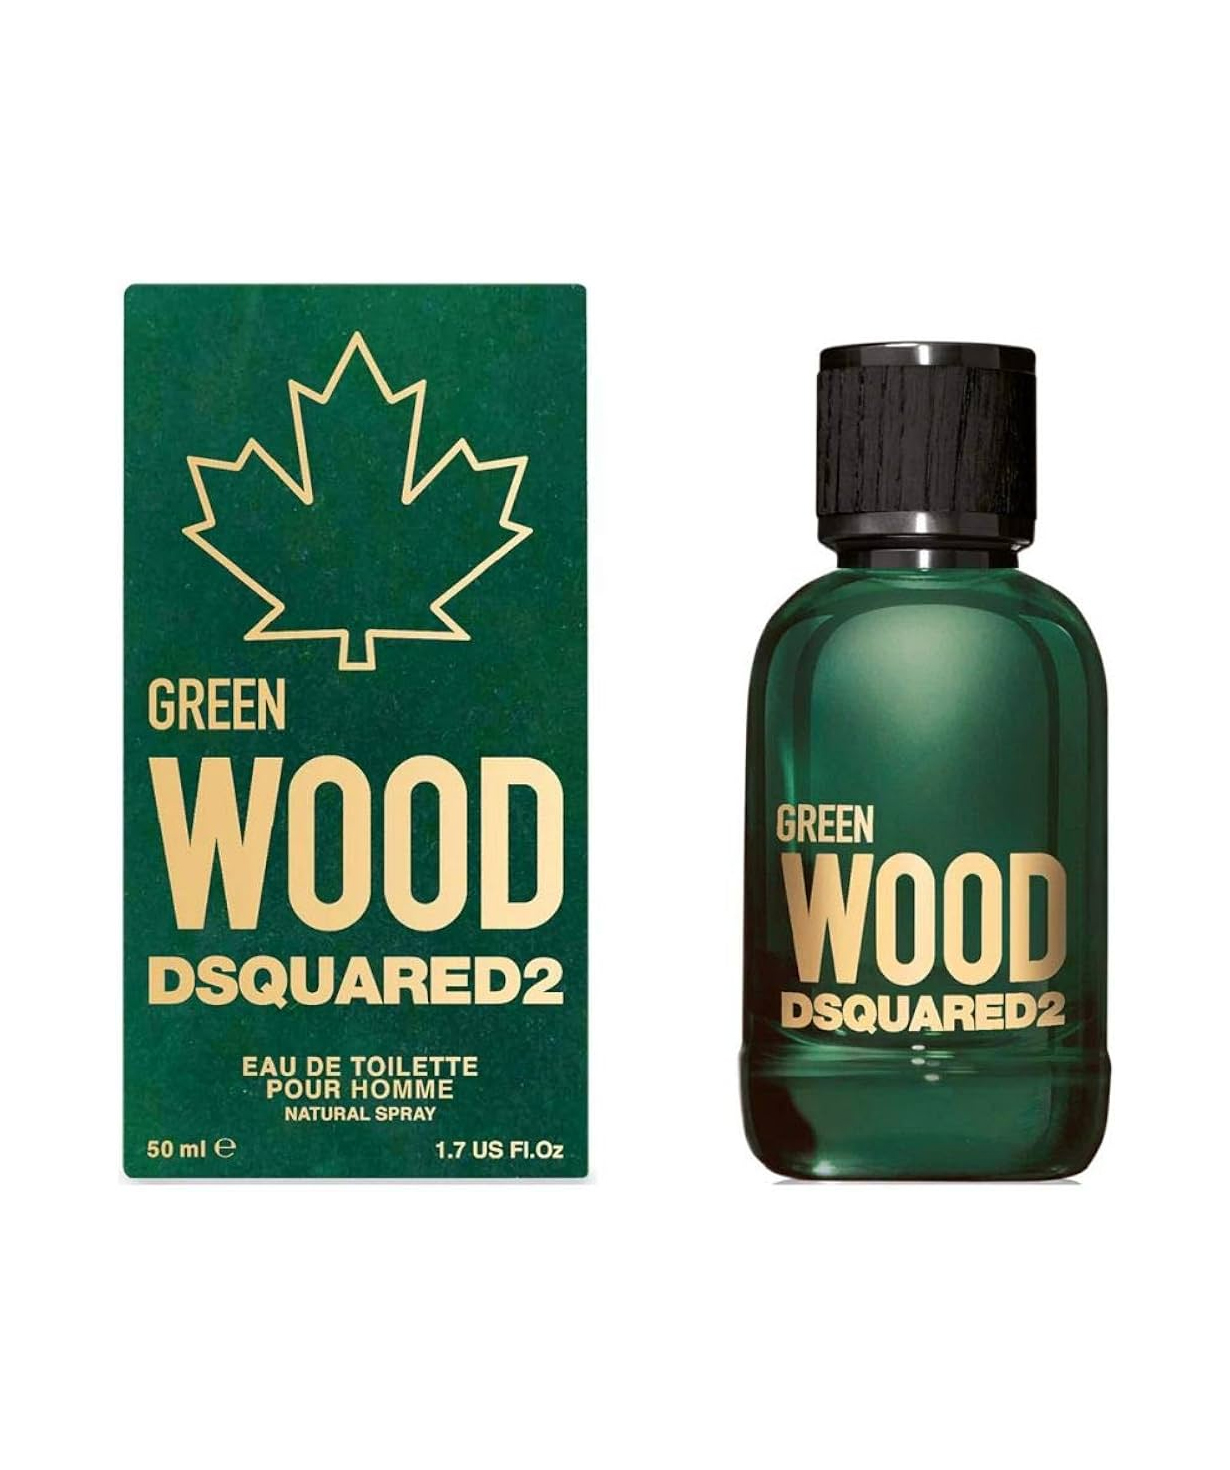 Perfume «Dsquared2» Green Wood, for men, 50 ml